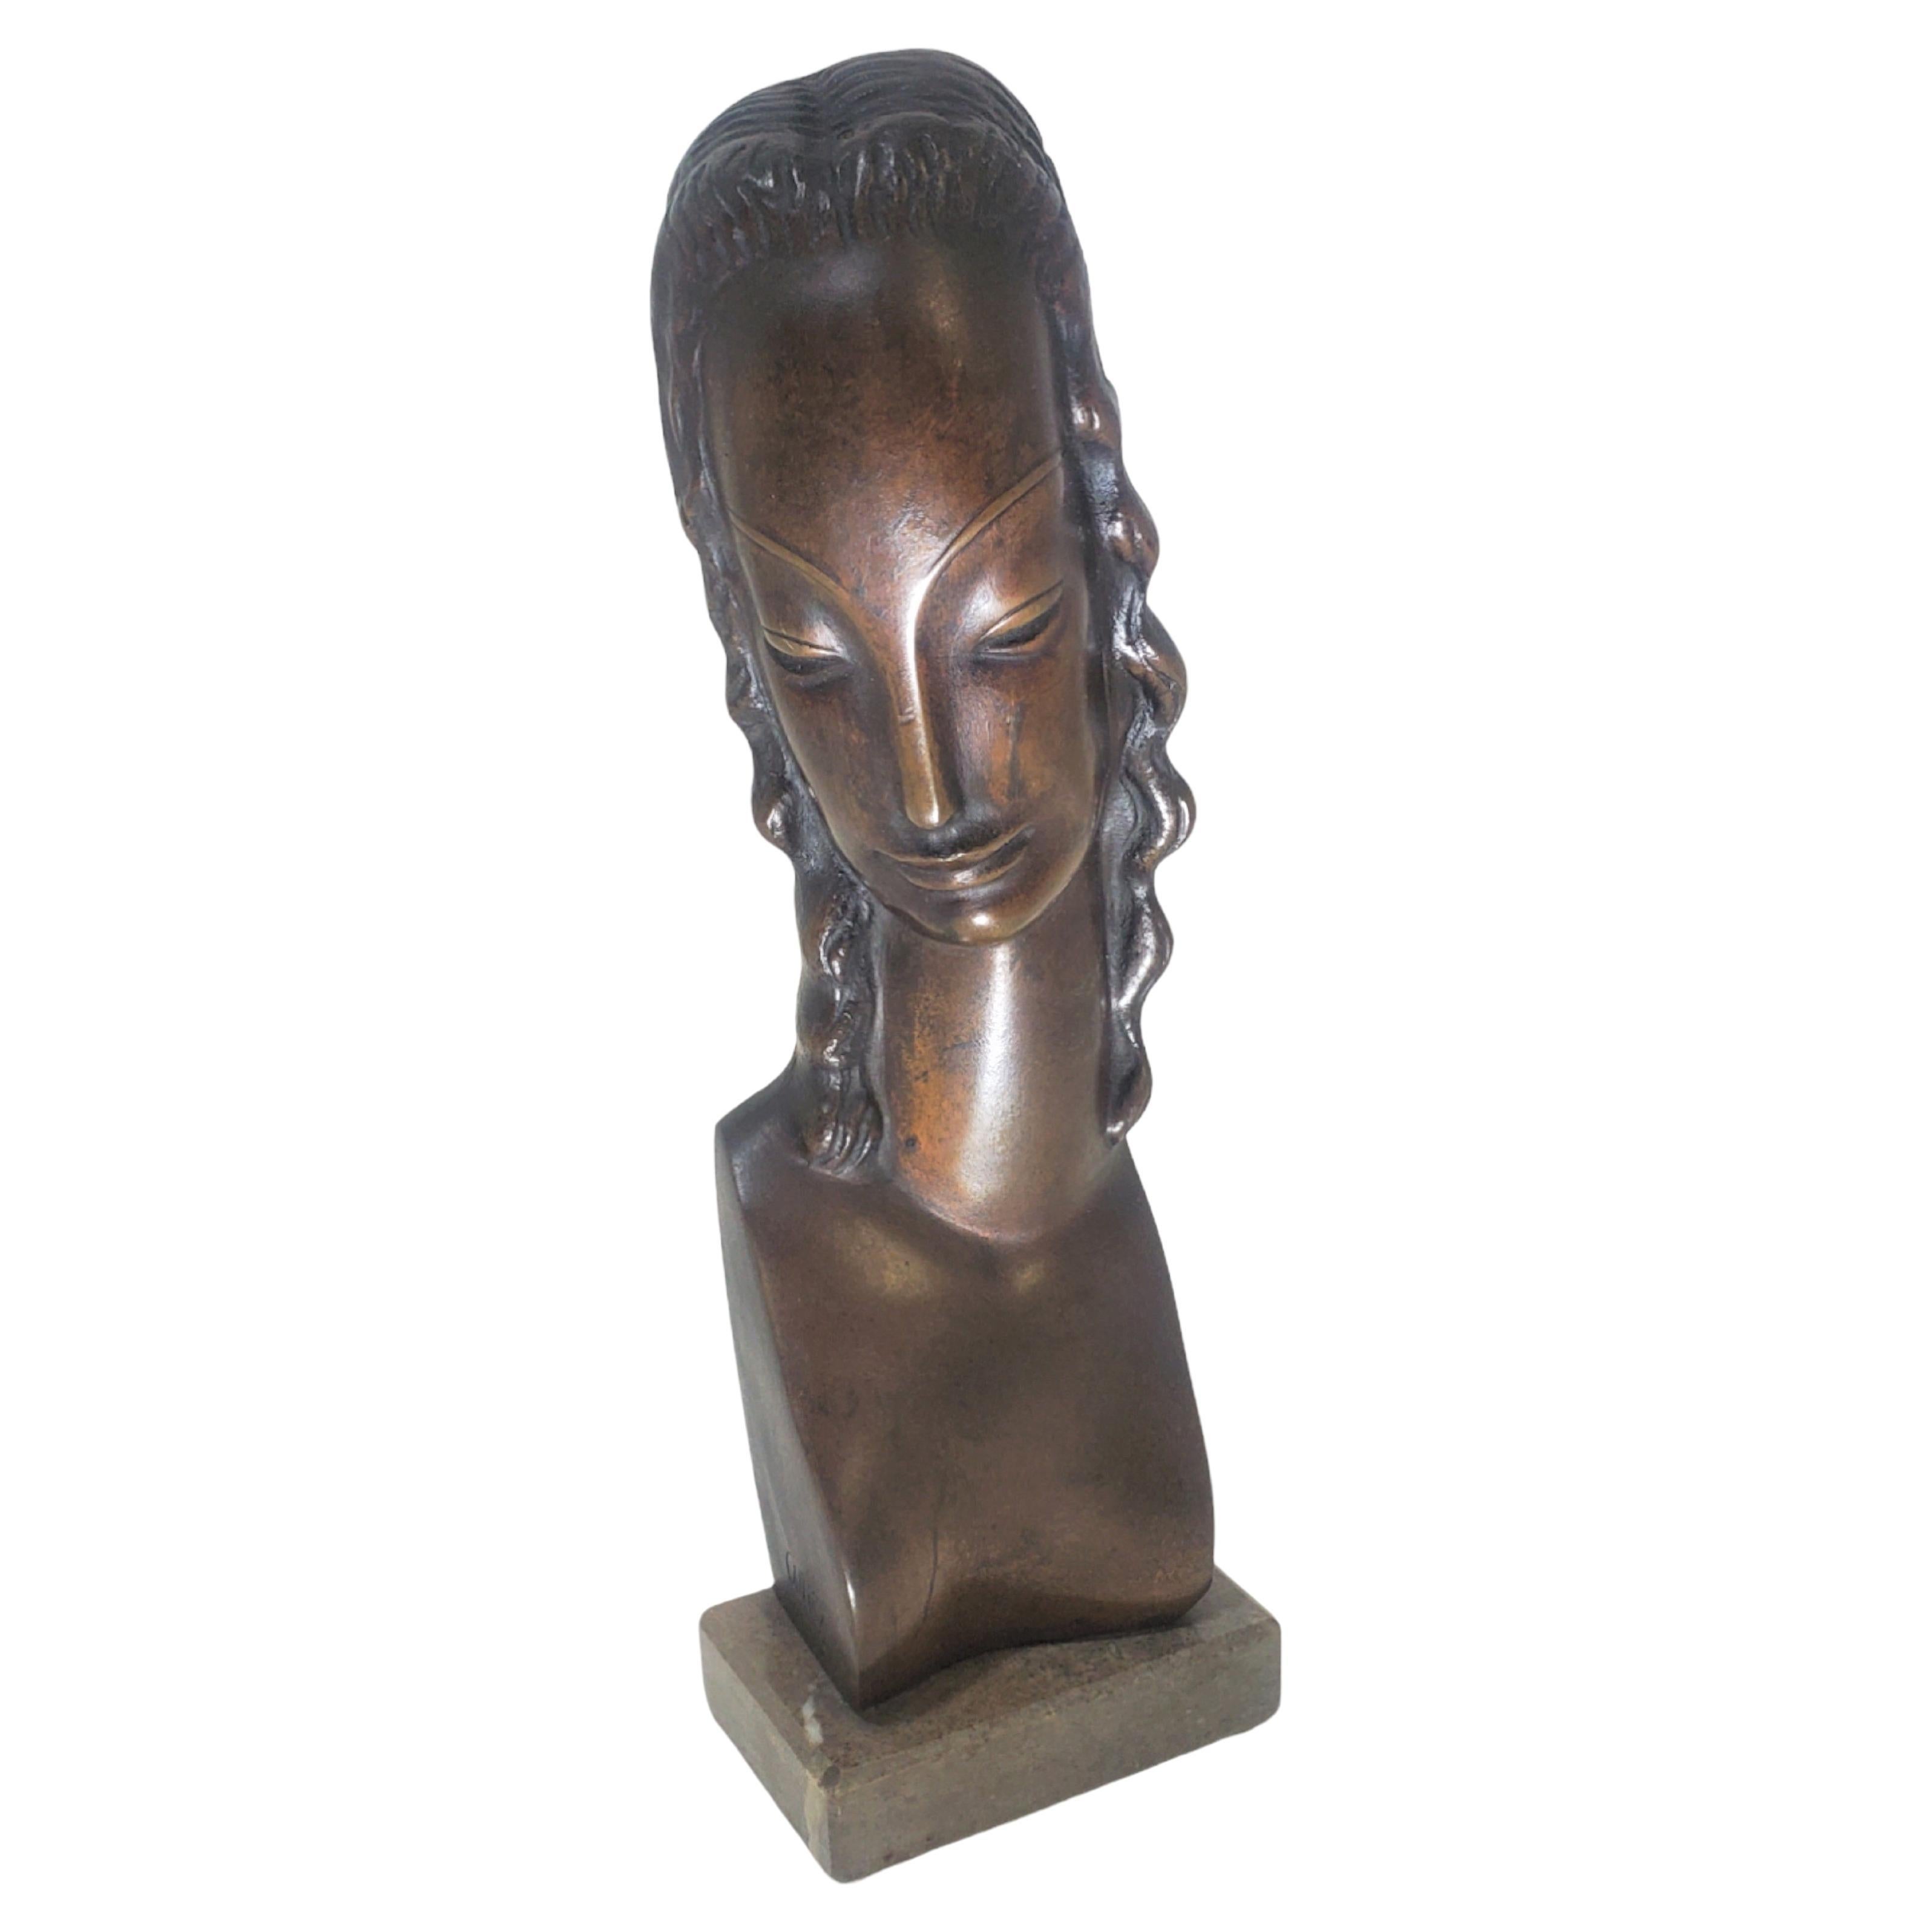  Minimalist bronze sculpture / portrait / bust of a woman by Adam Antes  For Sale